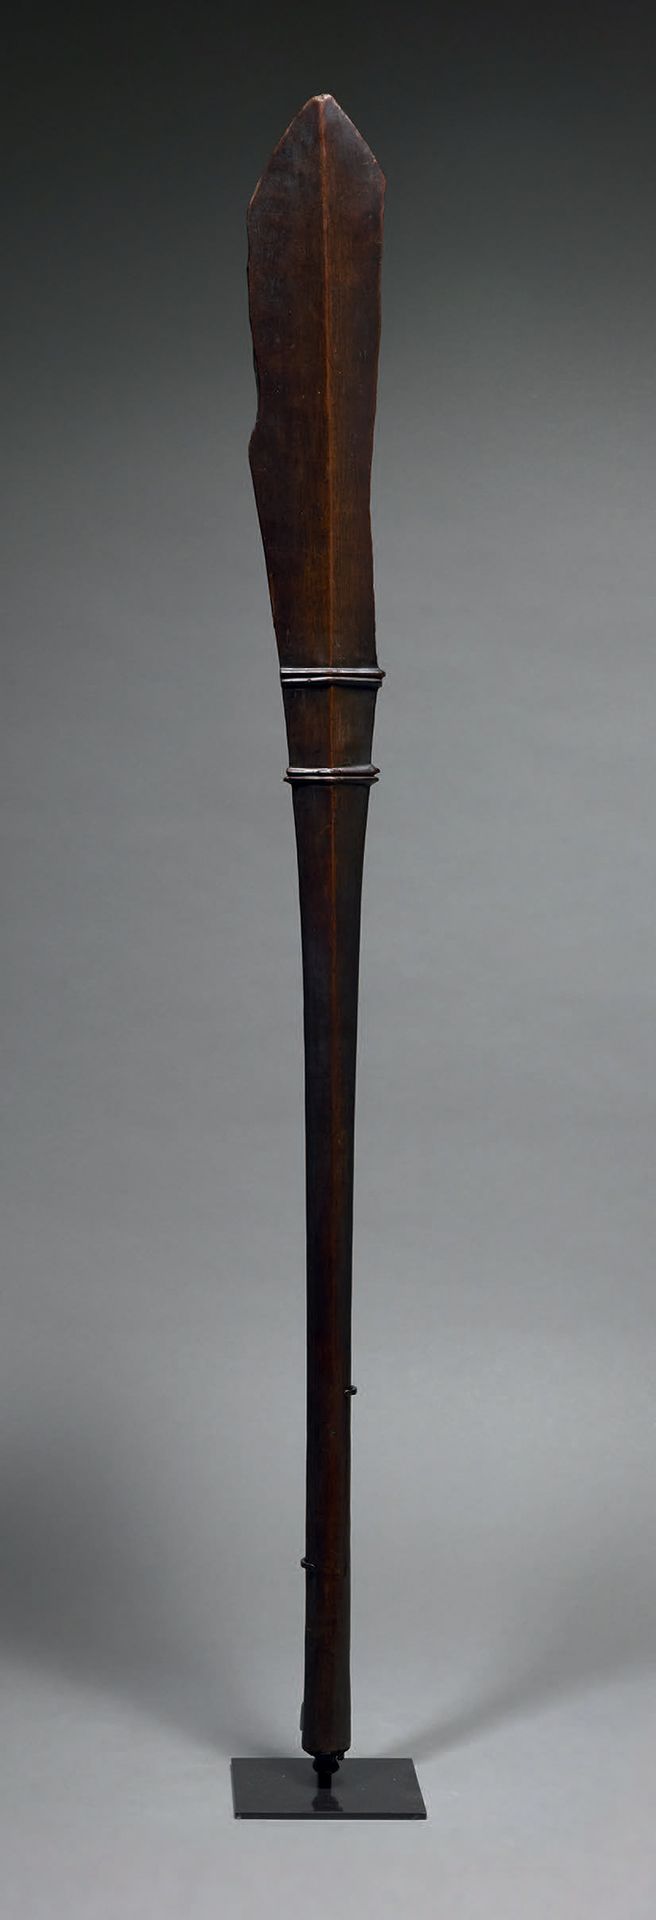 Null 
Keule Akau-ta oder Pakipaki

Tonga

Holz

L. 125 cm



Provenienzen:

- Ge&hellip;